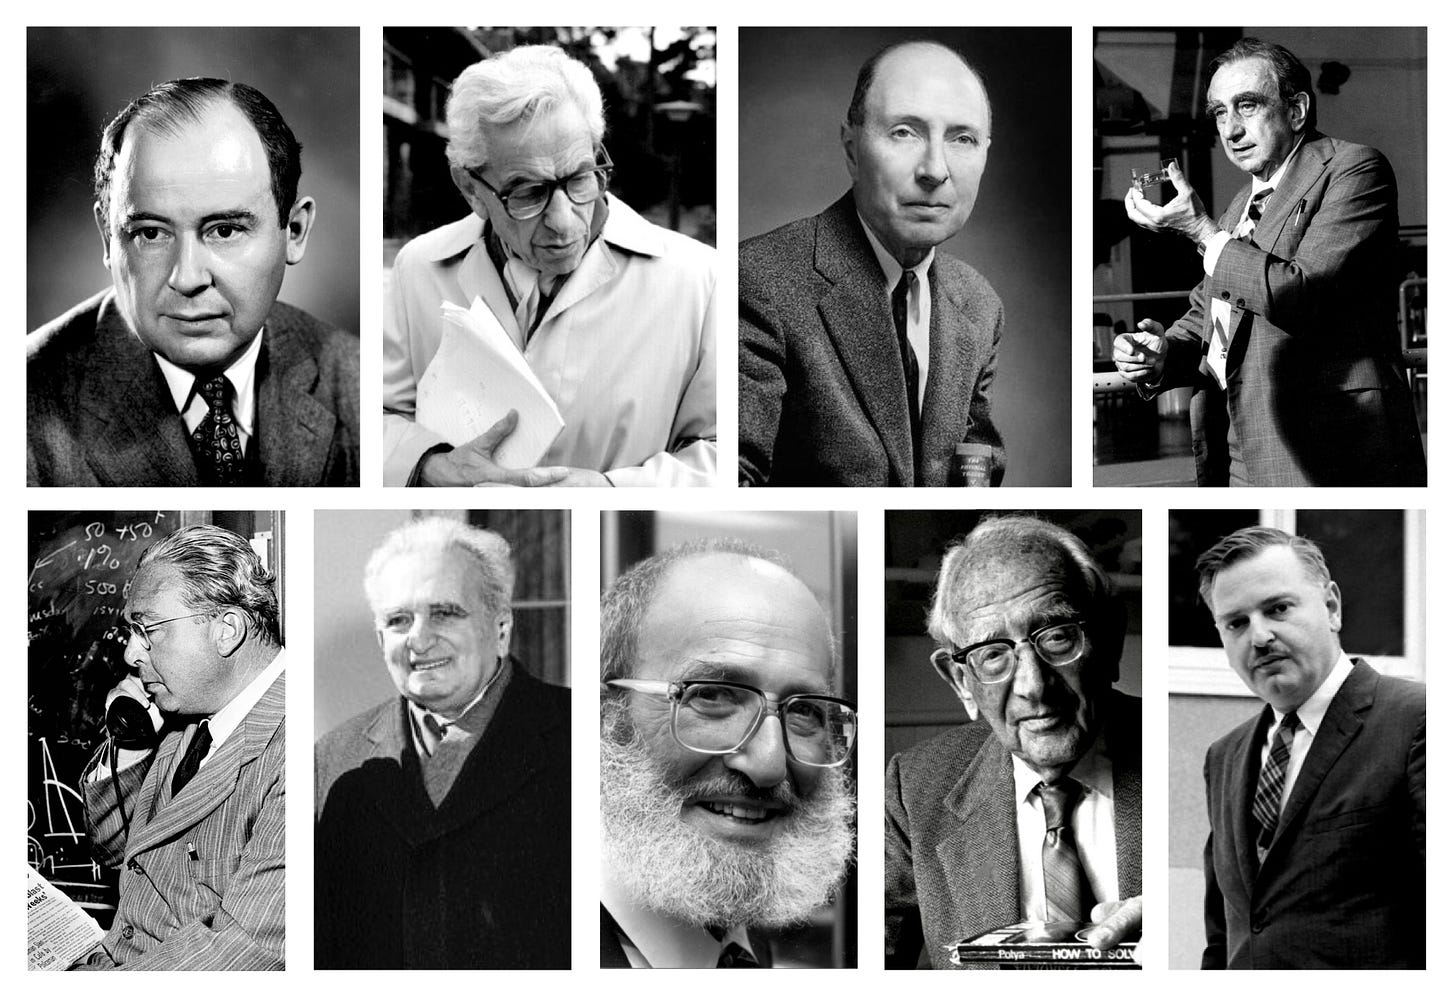 Photos of nine Martians of Budapest: von Neumann, Erdos, Wigner, Teller, Szilard, Karman, Halmos, Polya and Kemeny